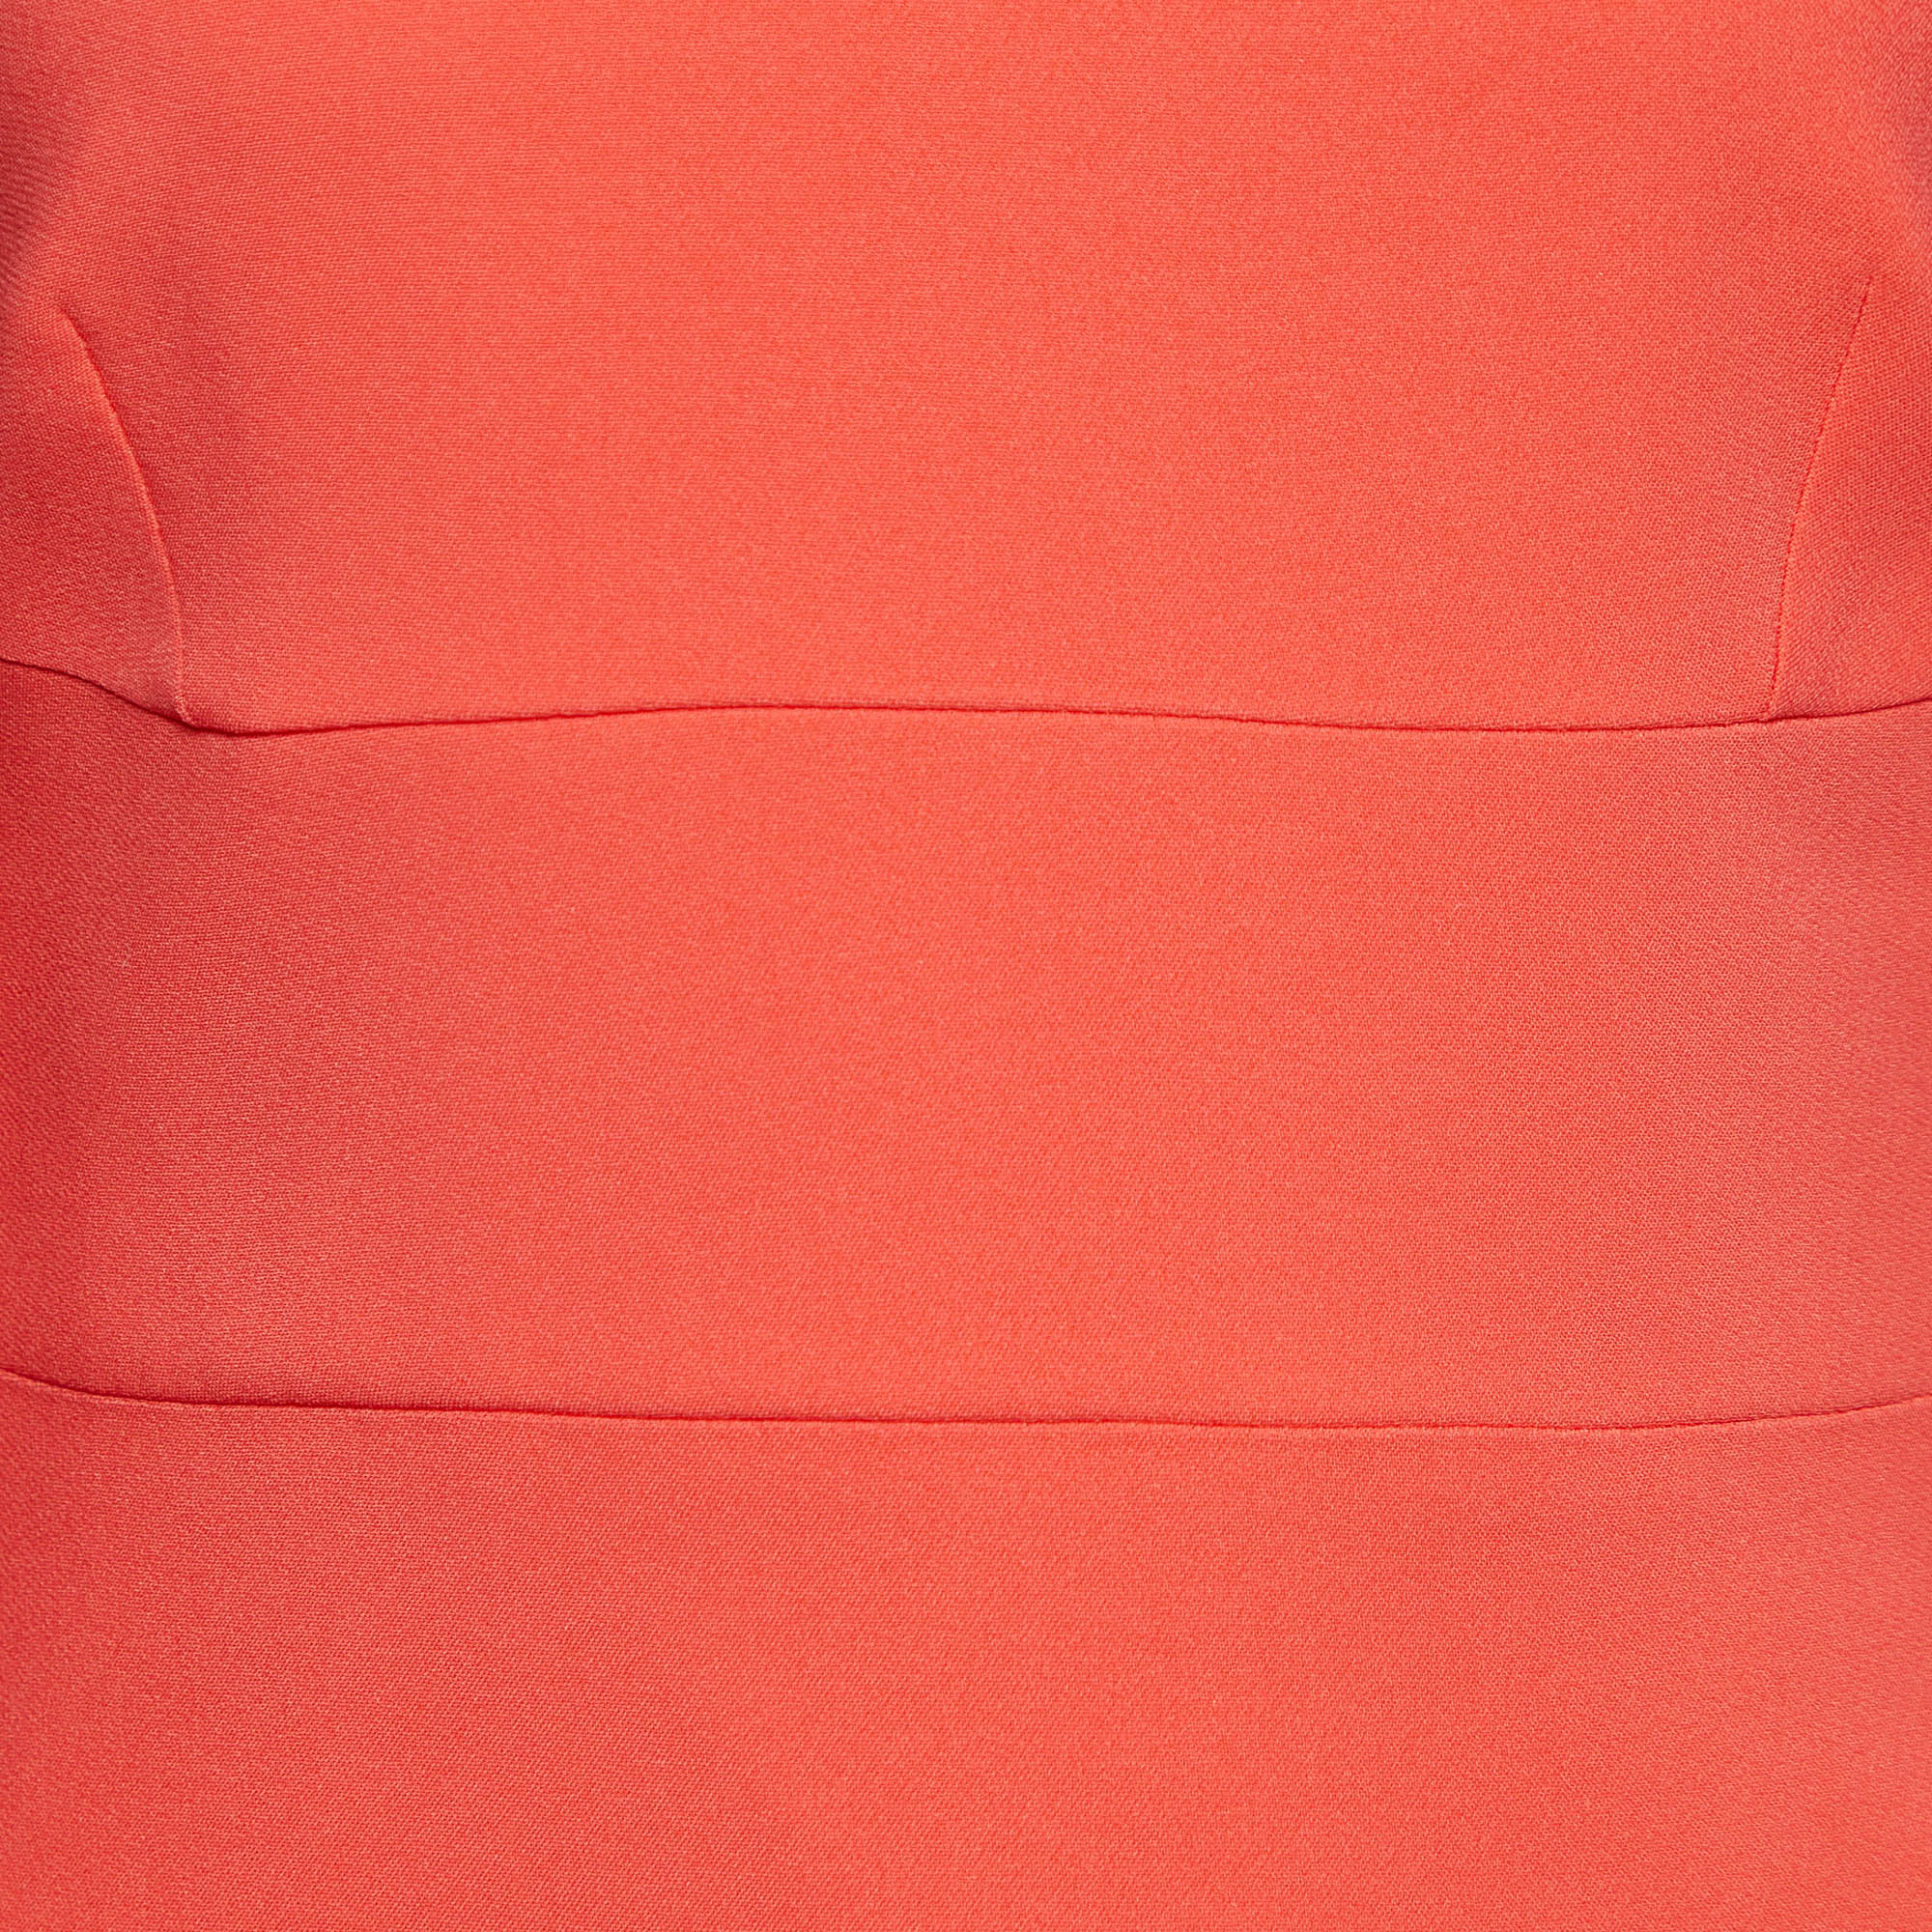 Stella McCartney Neon Pink Crepe Back Cut-Out Detail Sheath Dress S